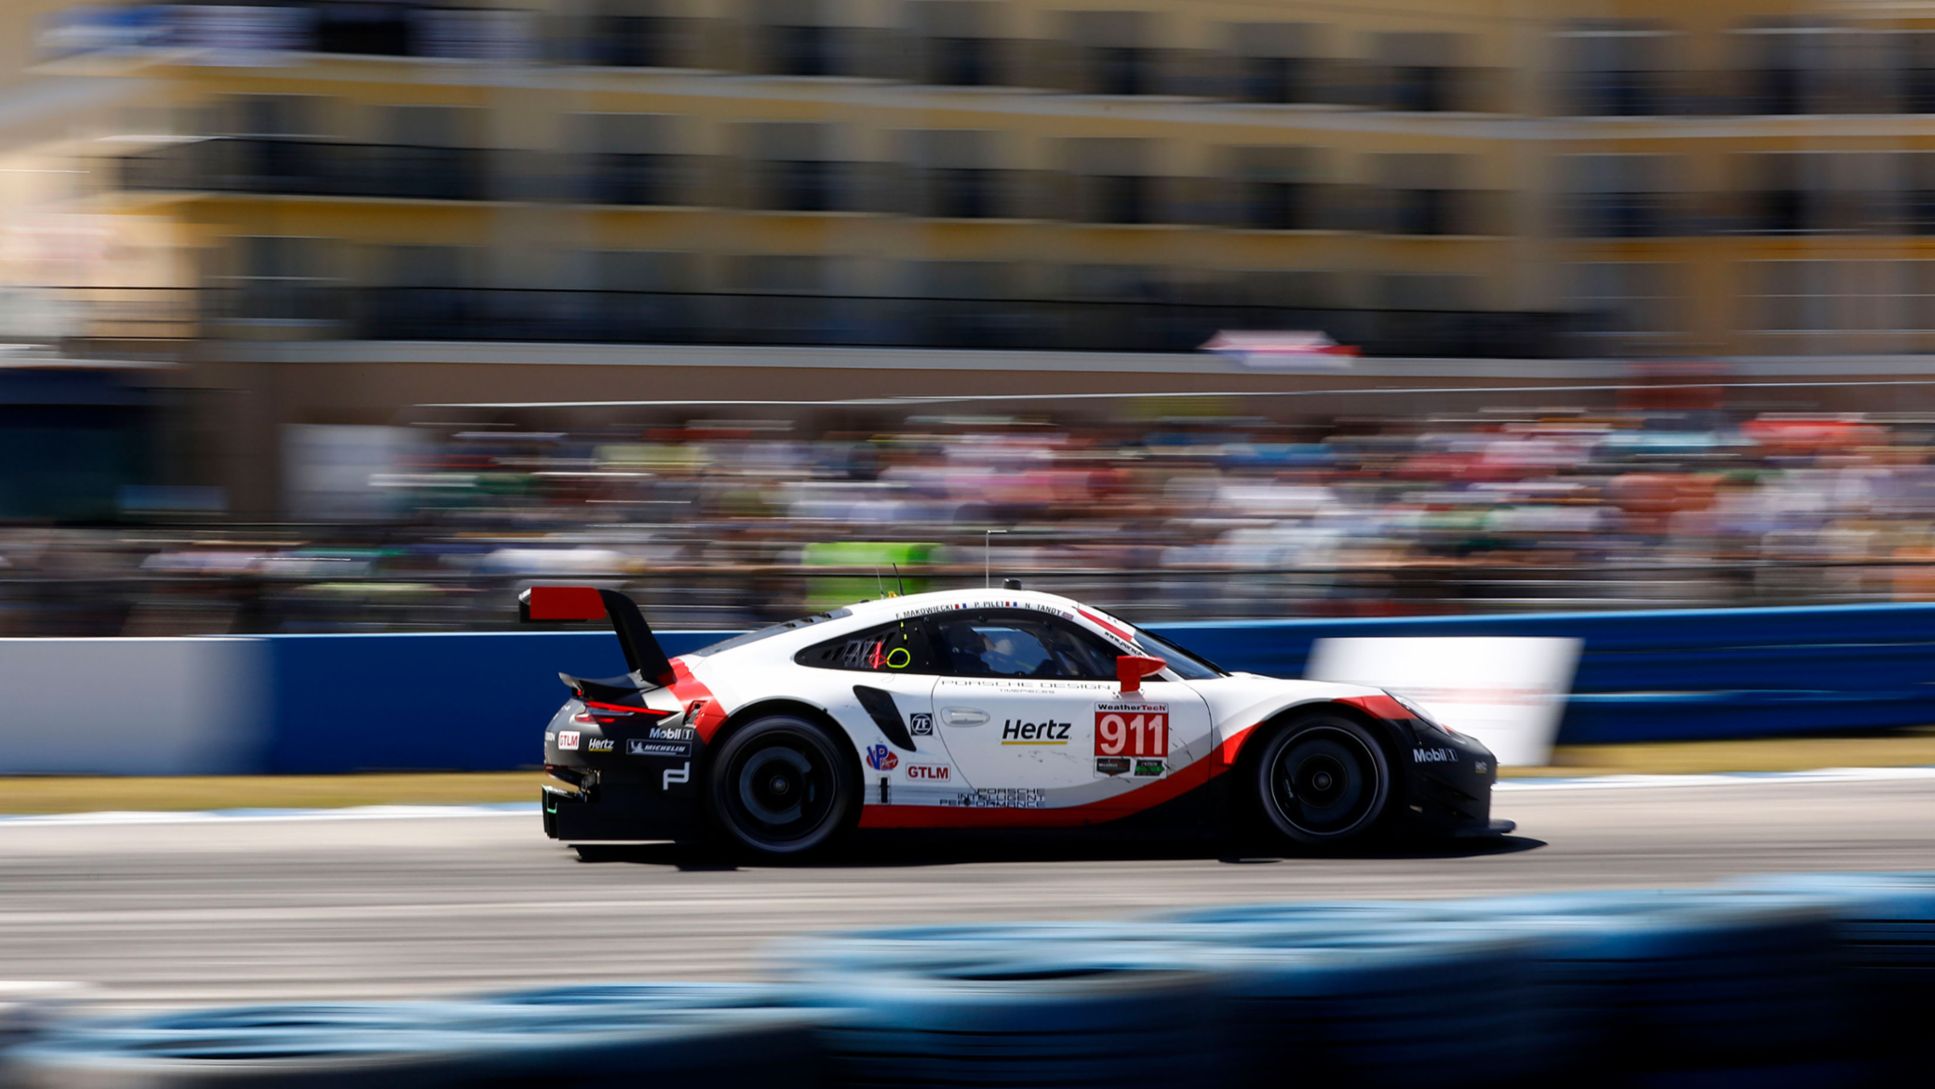 911 RSR, IMSA WeatherTech SportsCar Championship, round 2, 12 Hours of Sebring, USA, 2018, Porsche AG